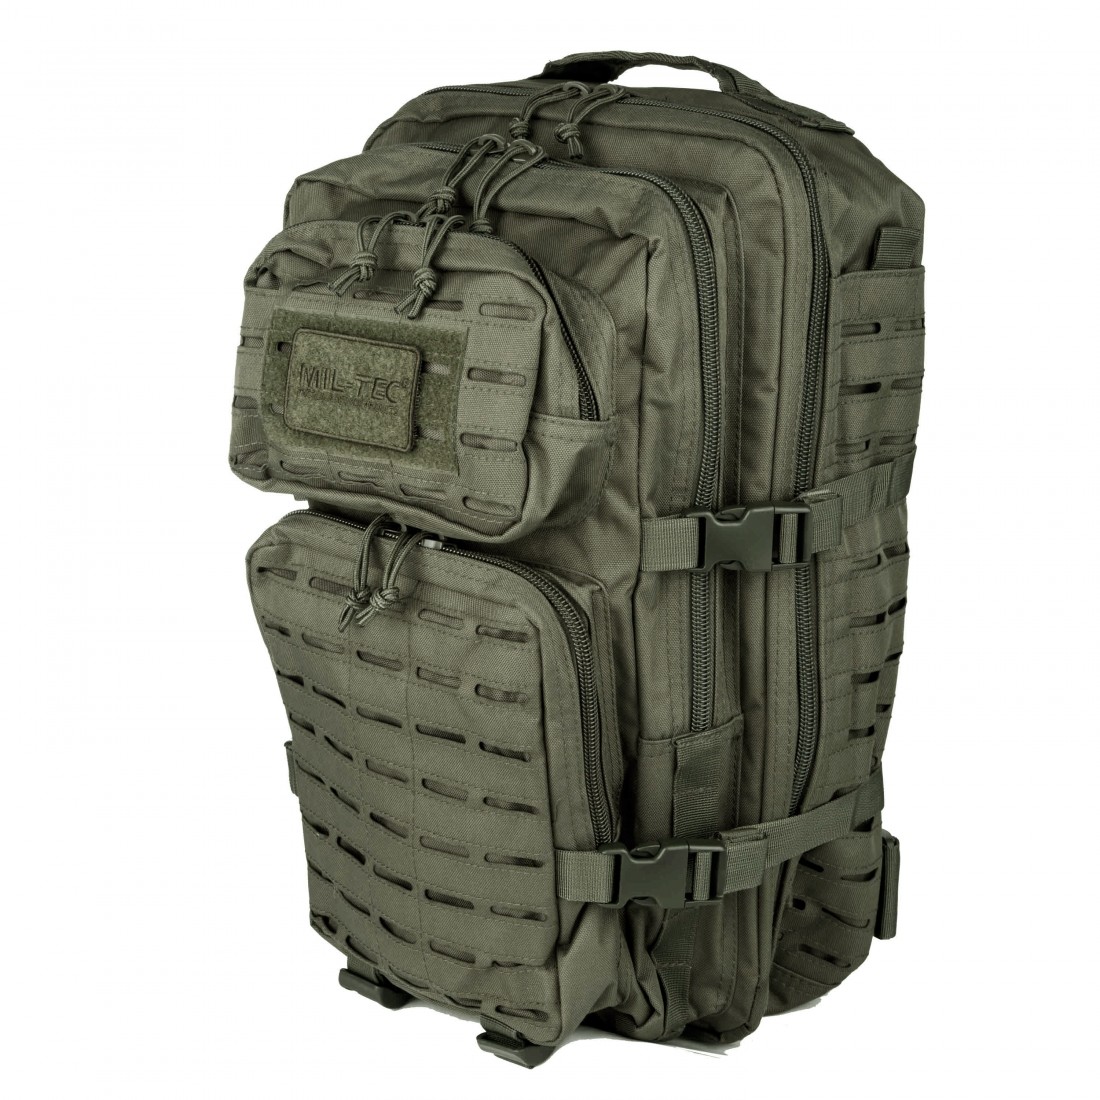 Mochila Mil-tec US Assault Pack LG 36 Litros Laser Cut Verde 14002701